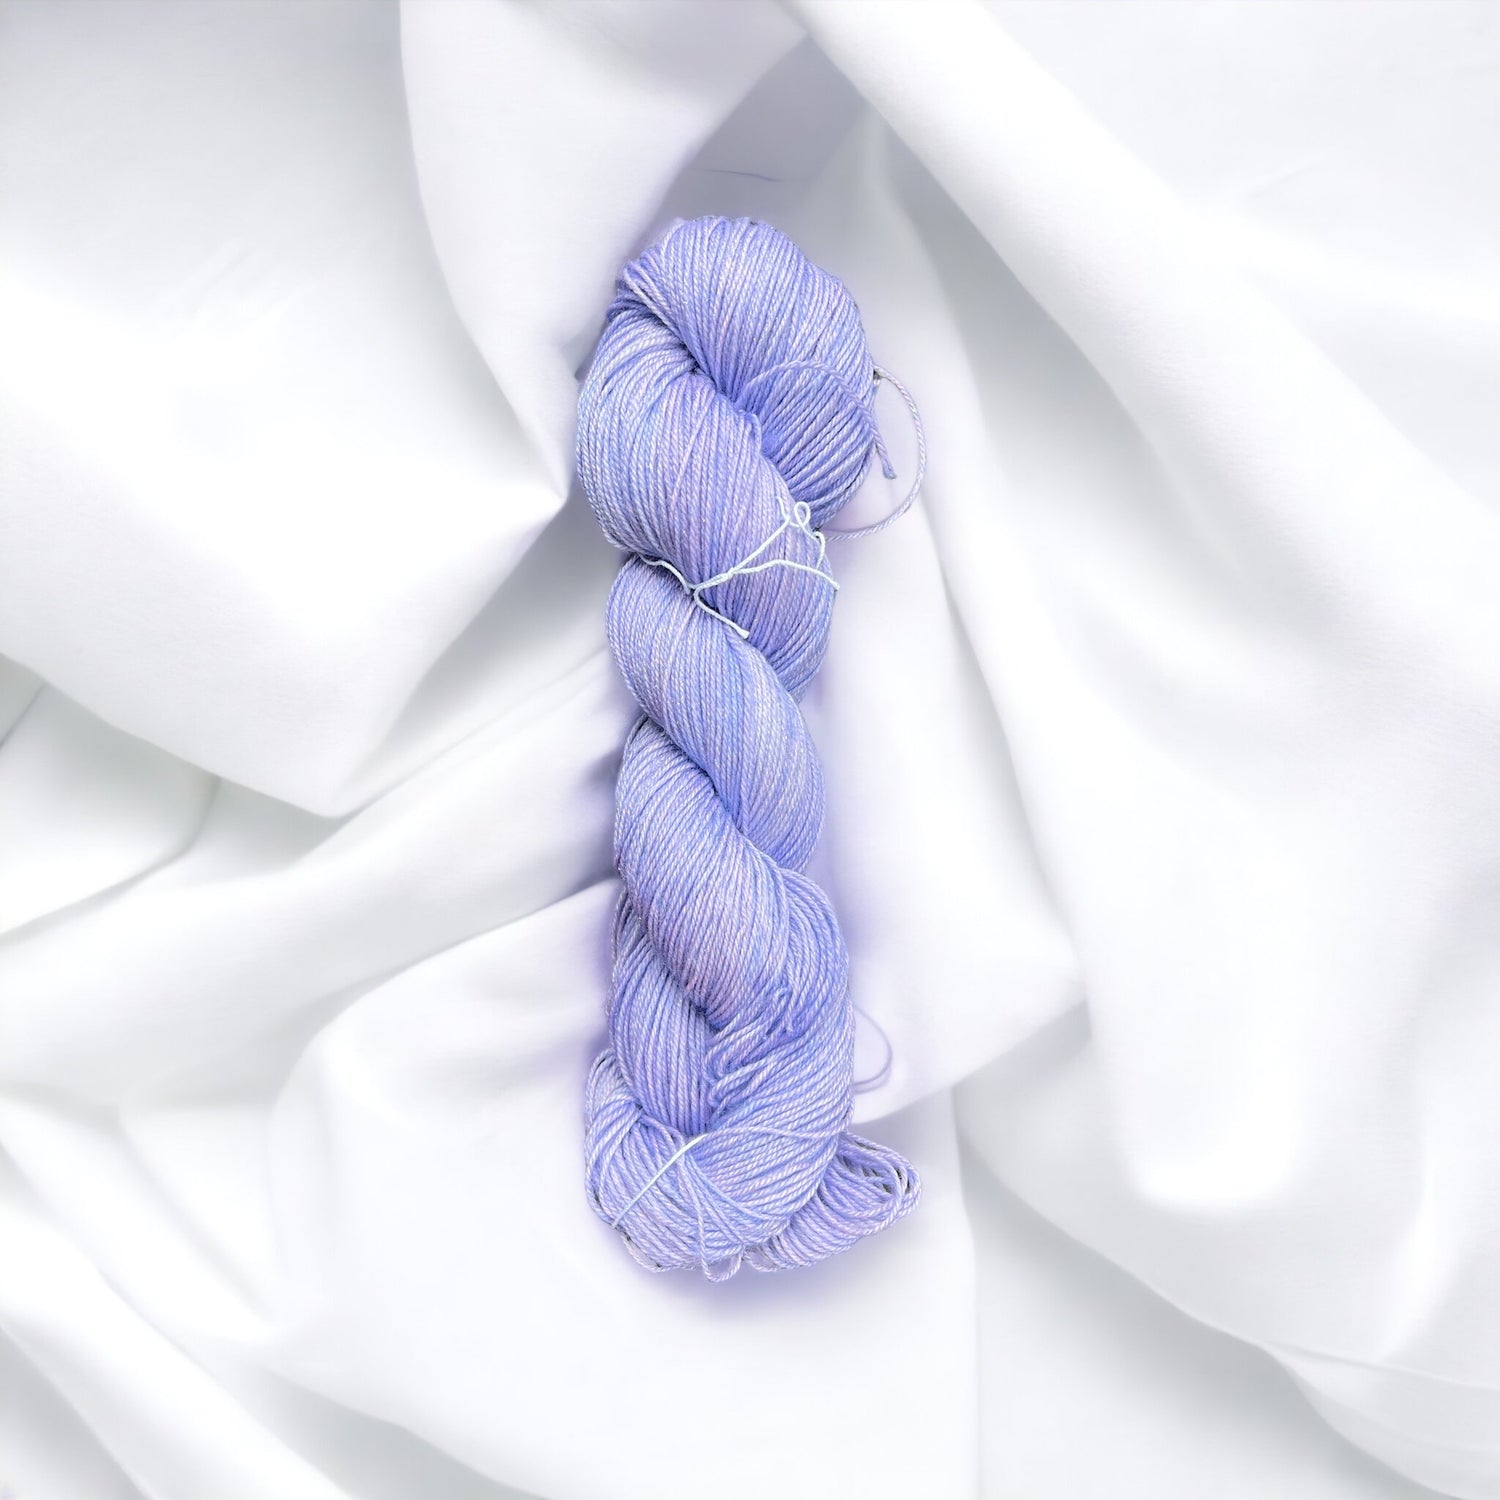 84/16 Superwash Merino/Sparkling Nylon sock yarn - SkeinAppeal